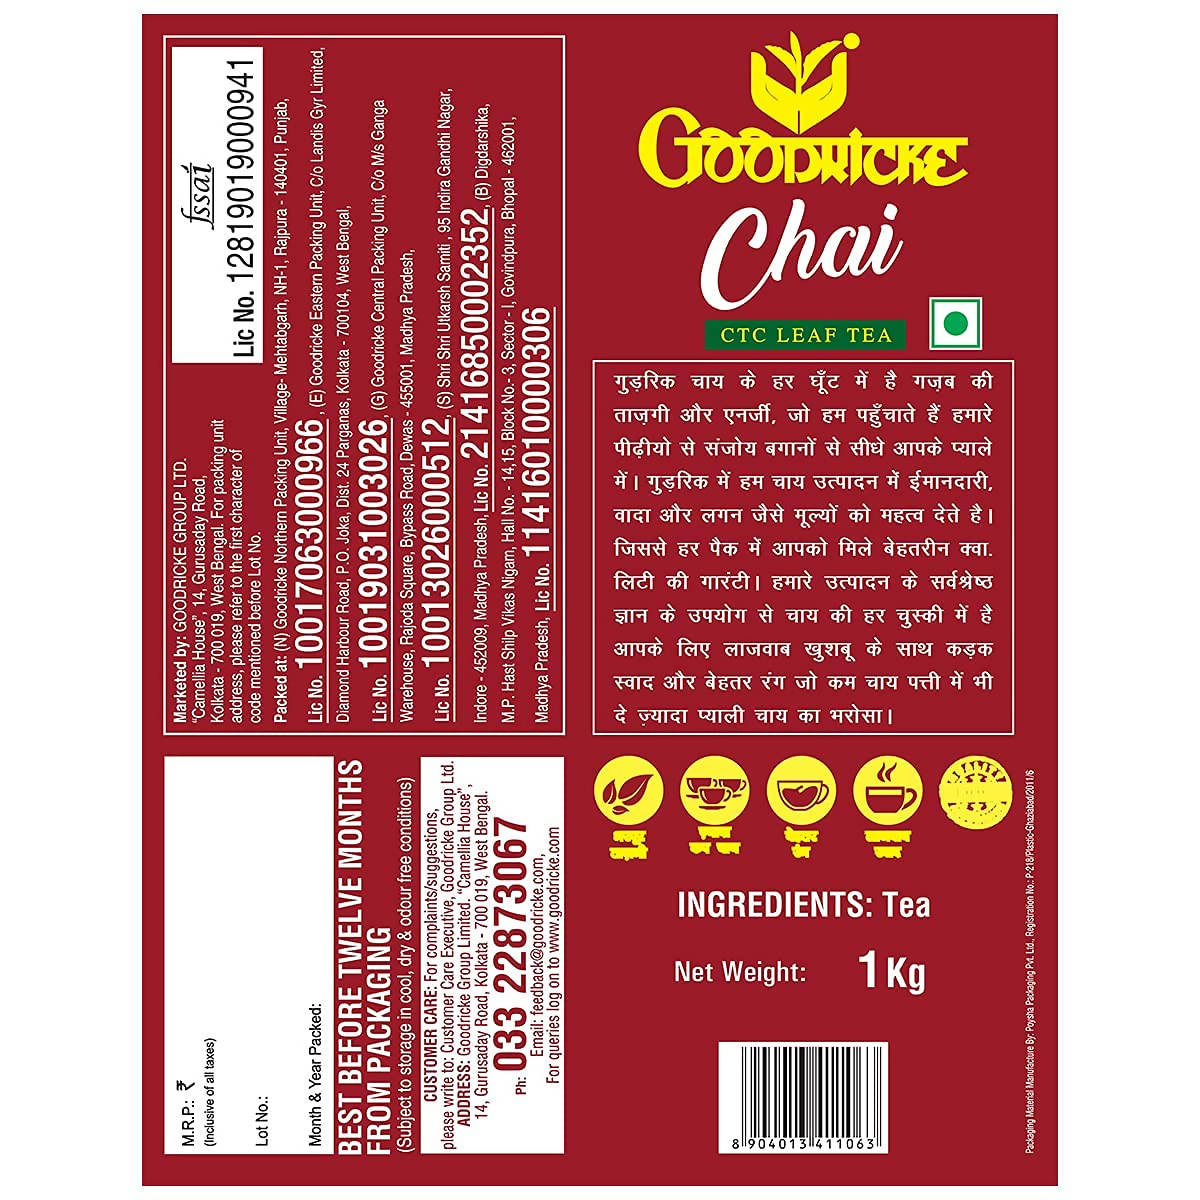 Goodricke Chai Leaf Tea